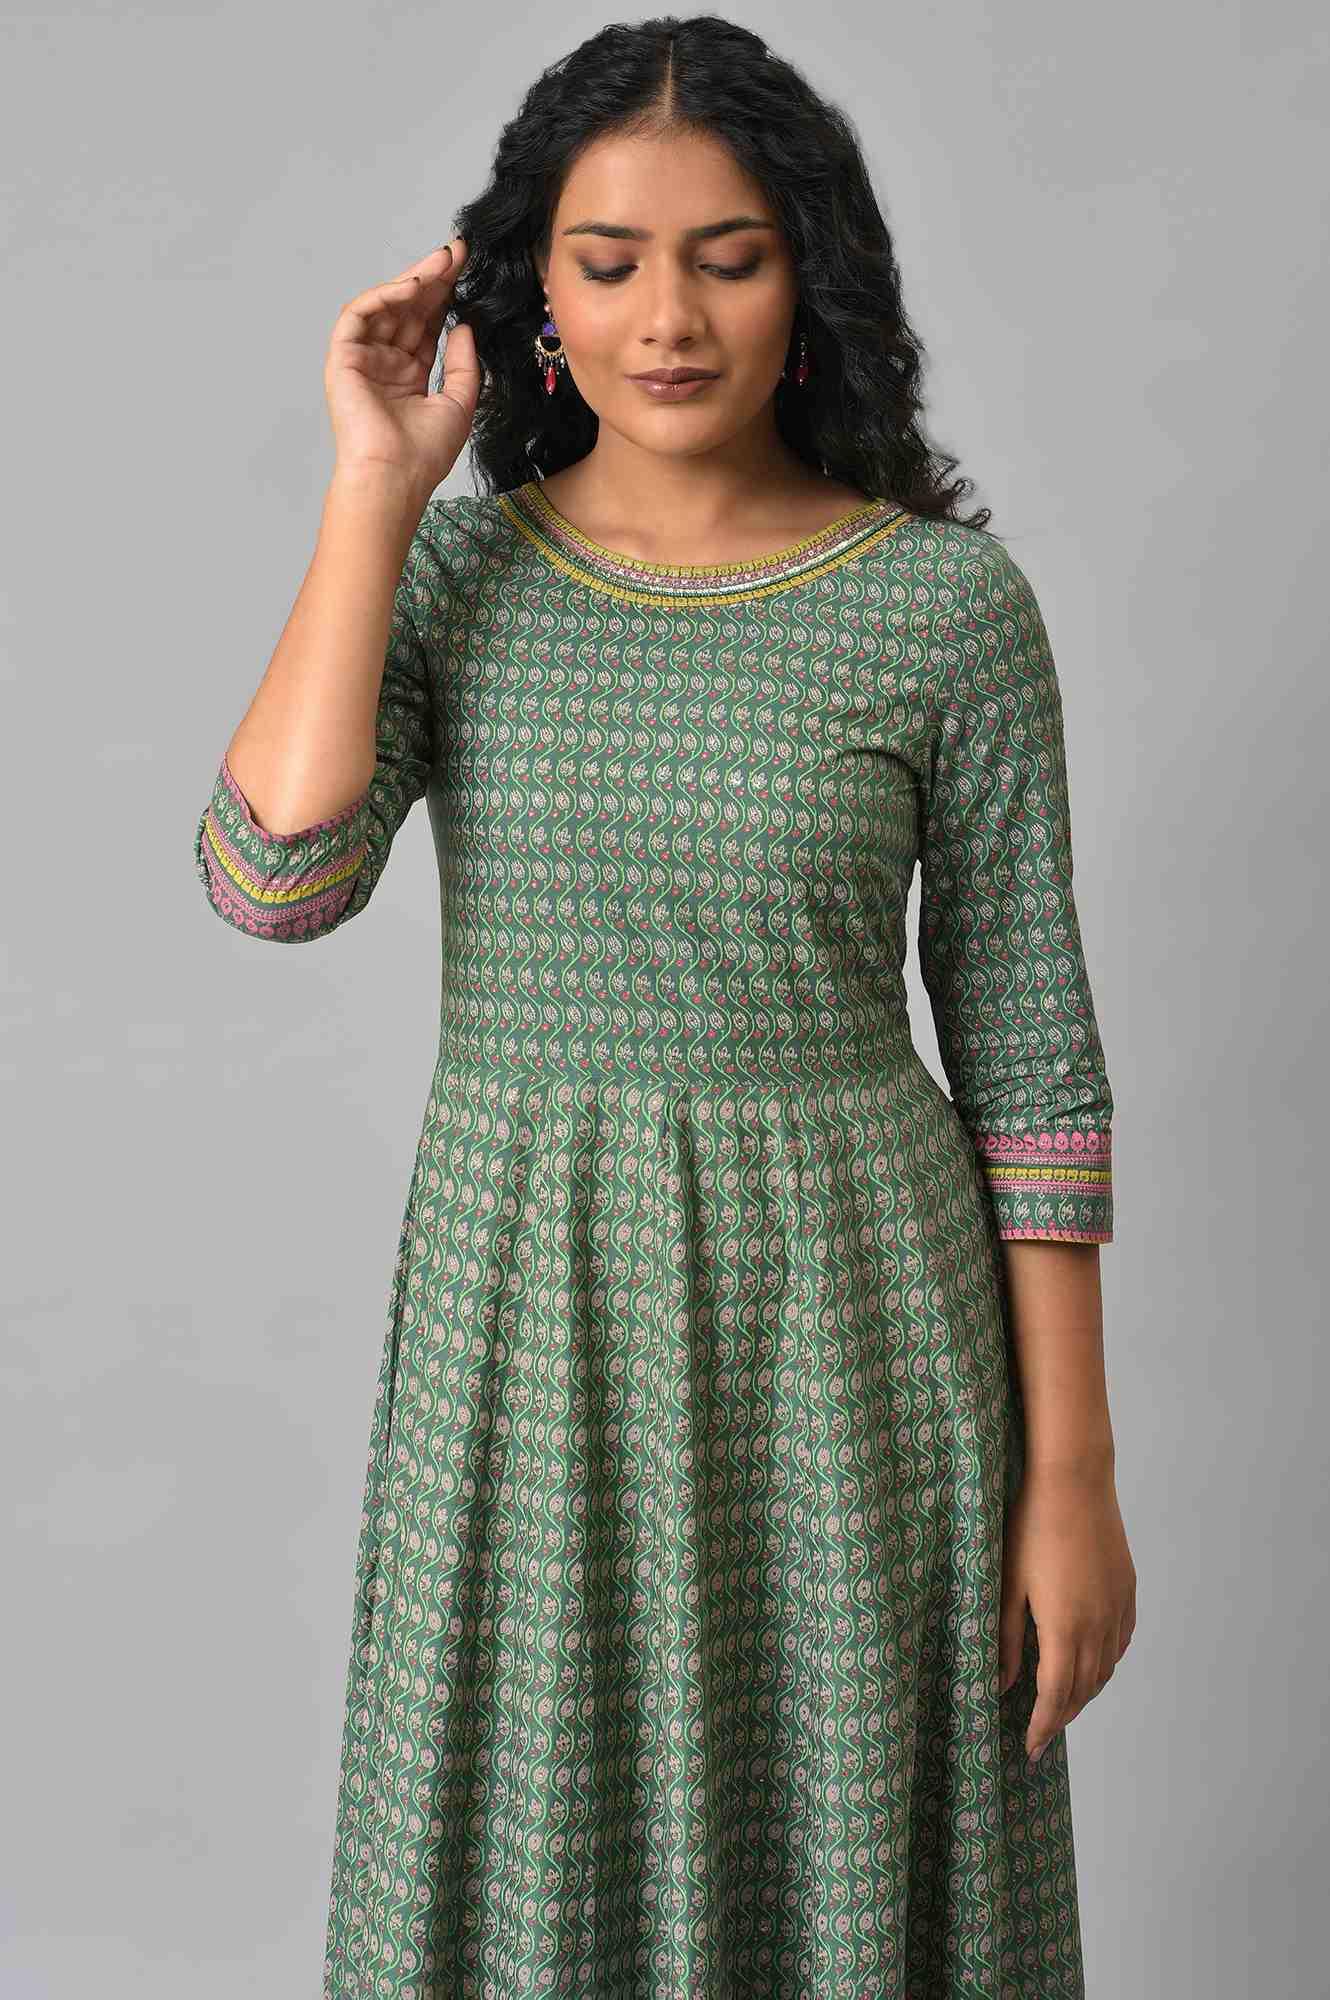 Leaf Green Glitter Printed Kalidar Dress - wforwoman